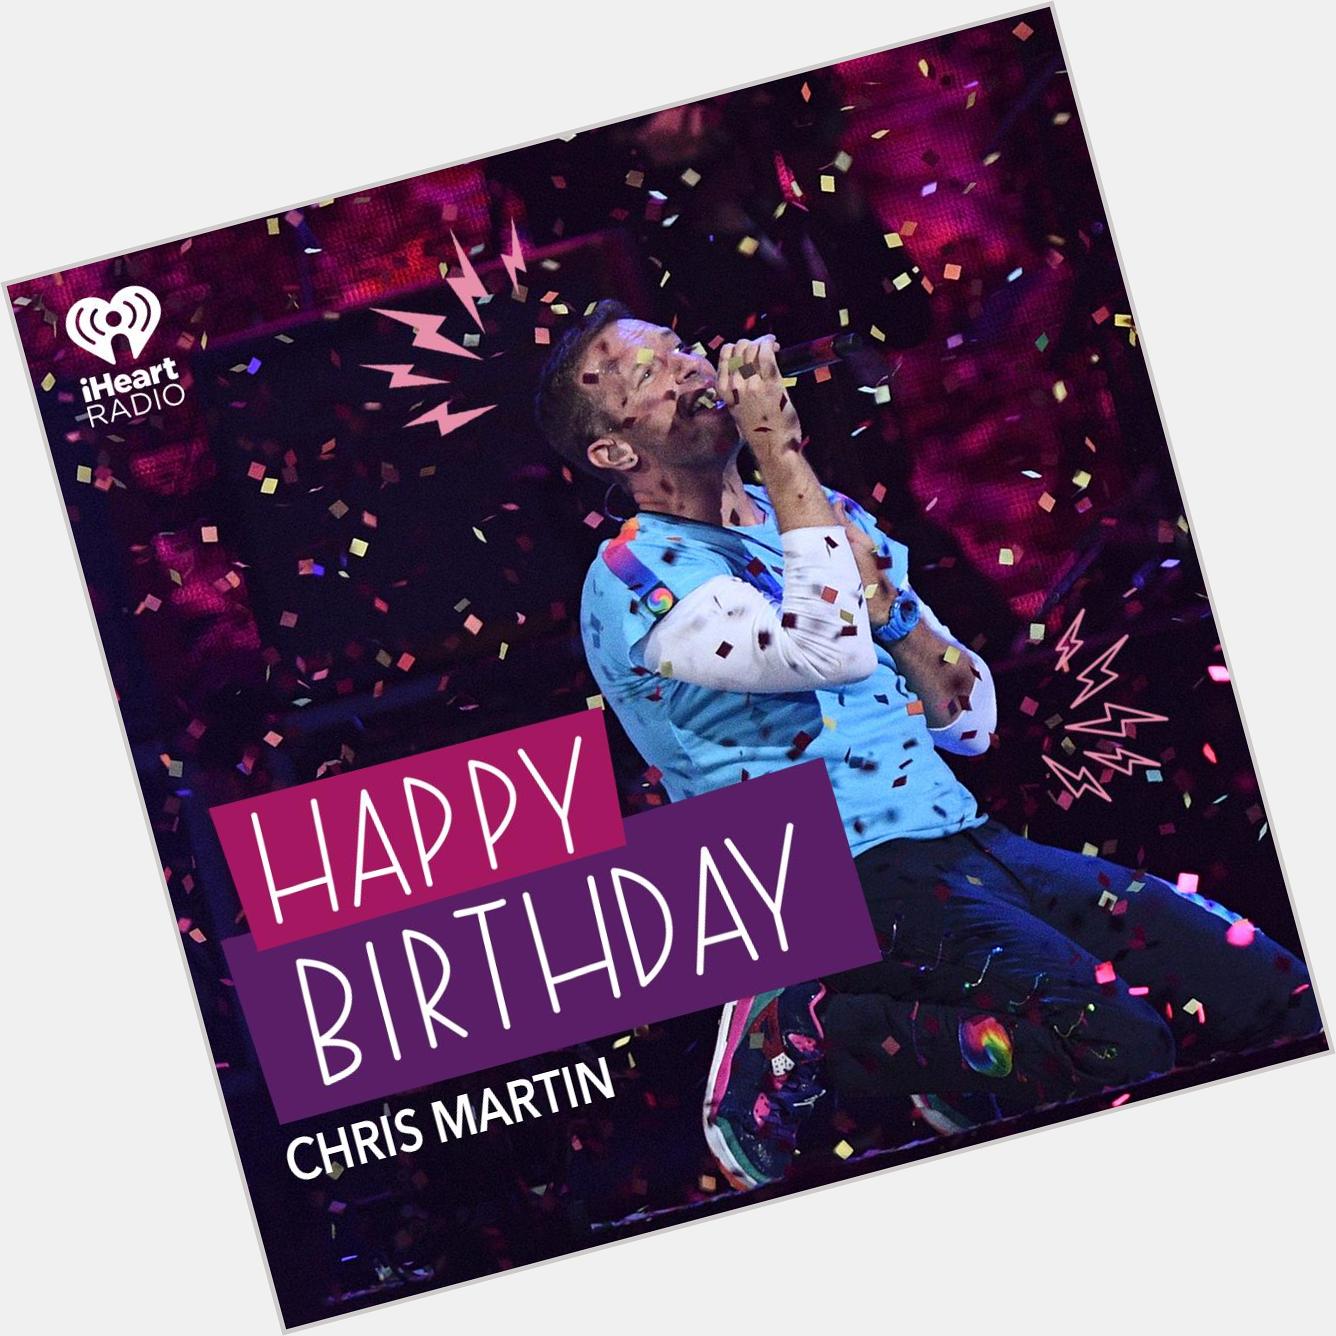 Happy Birthday Chris Martin! 